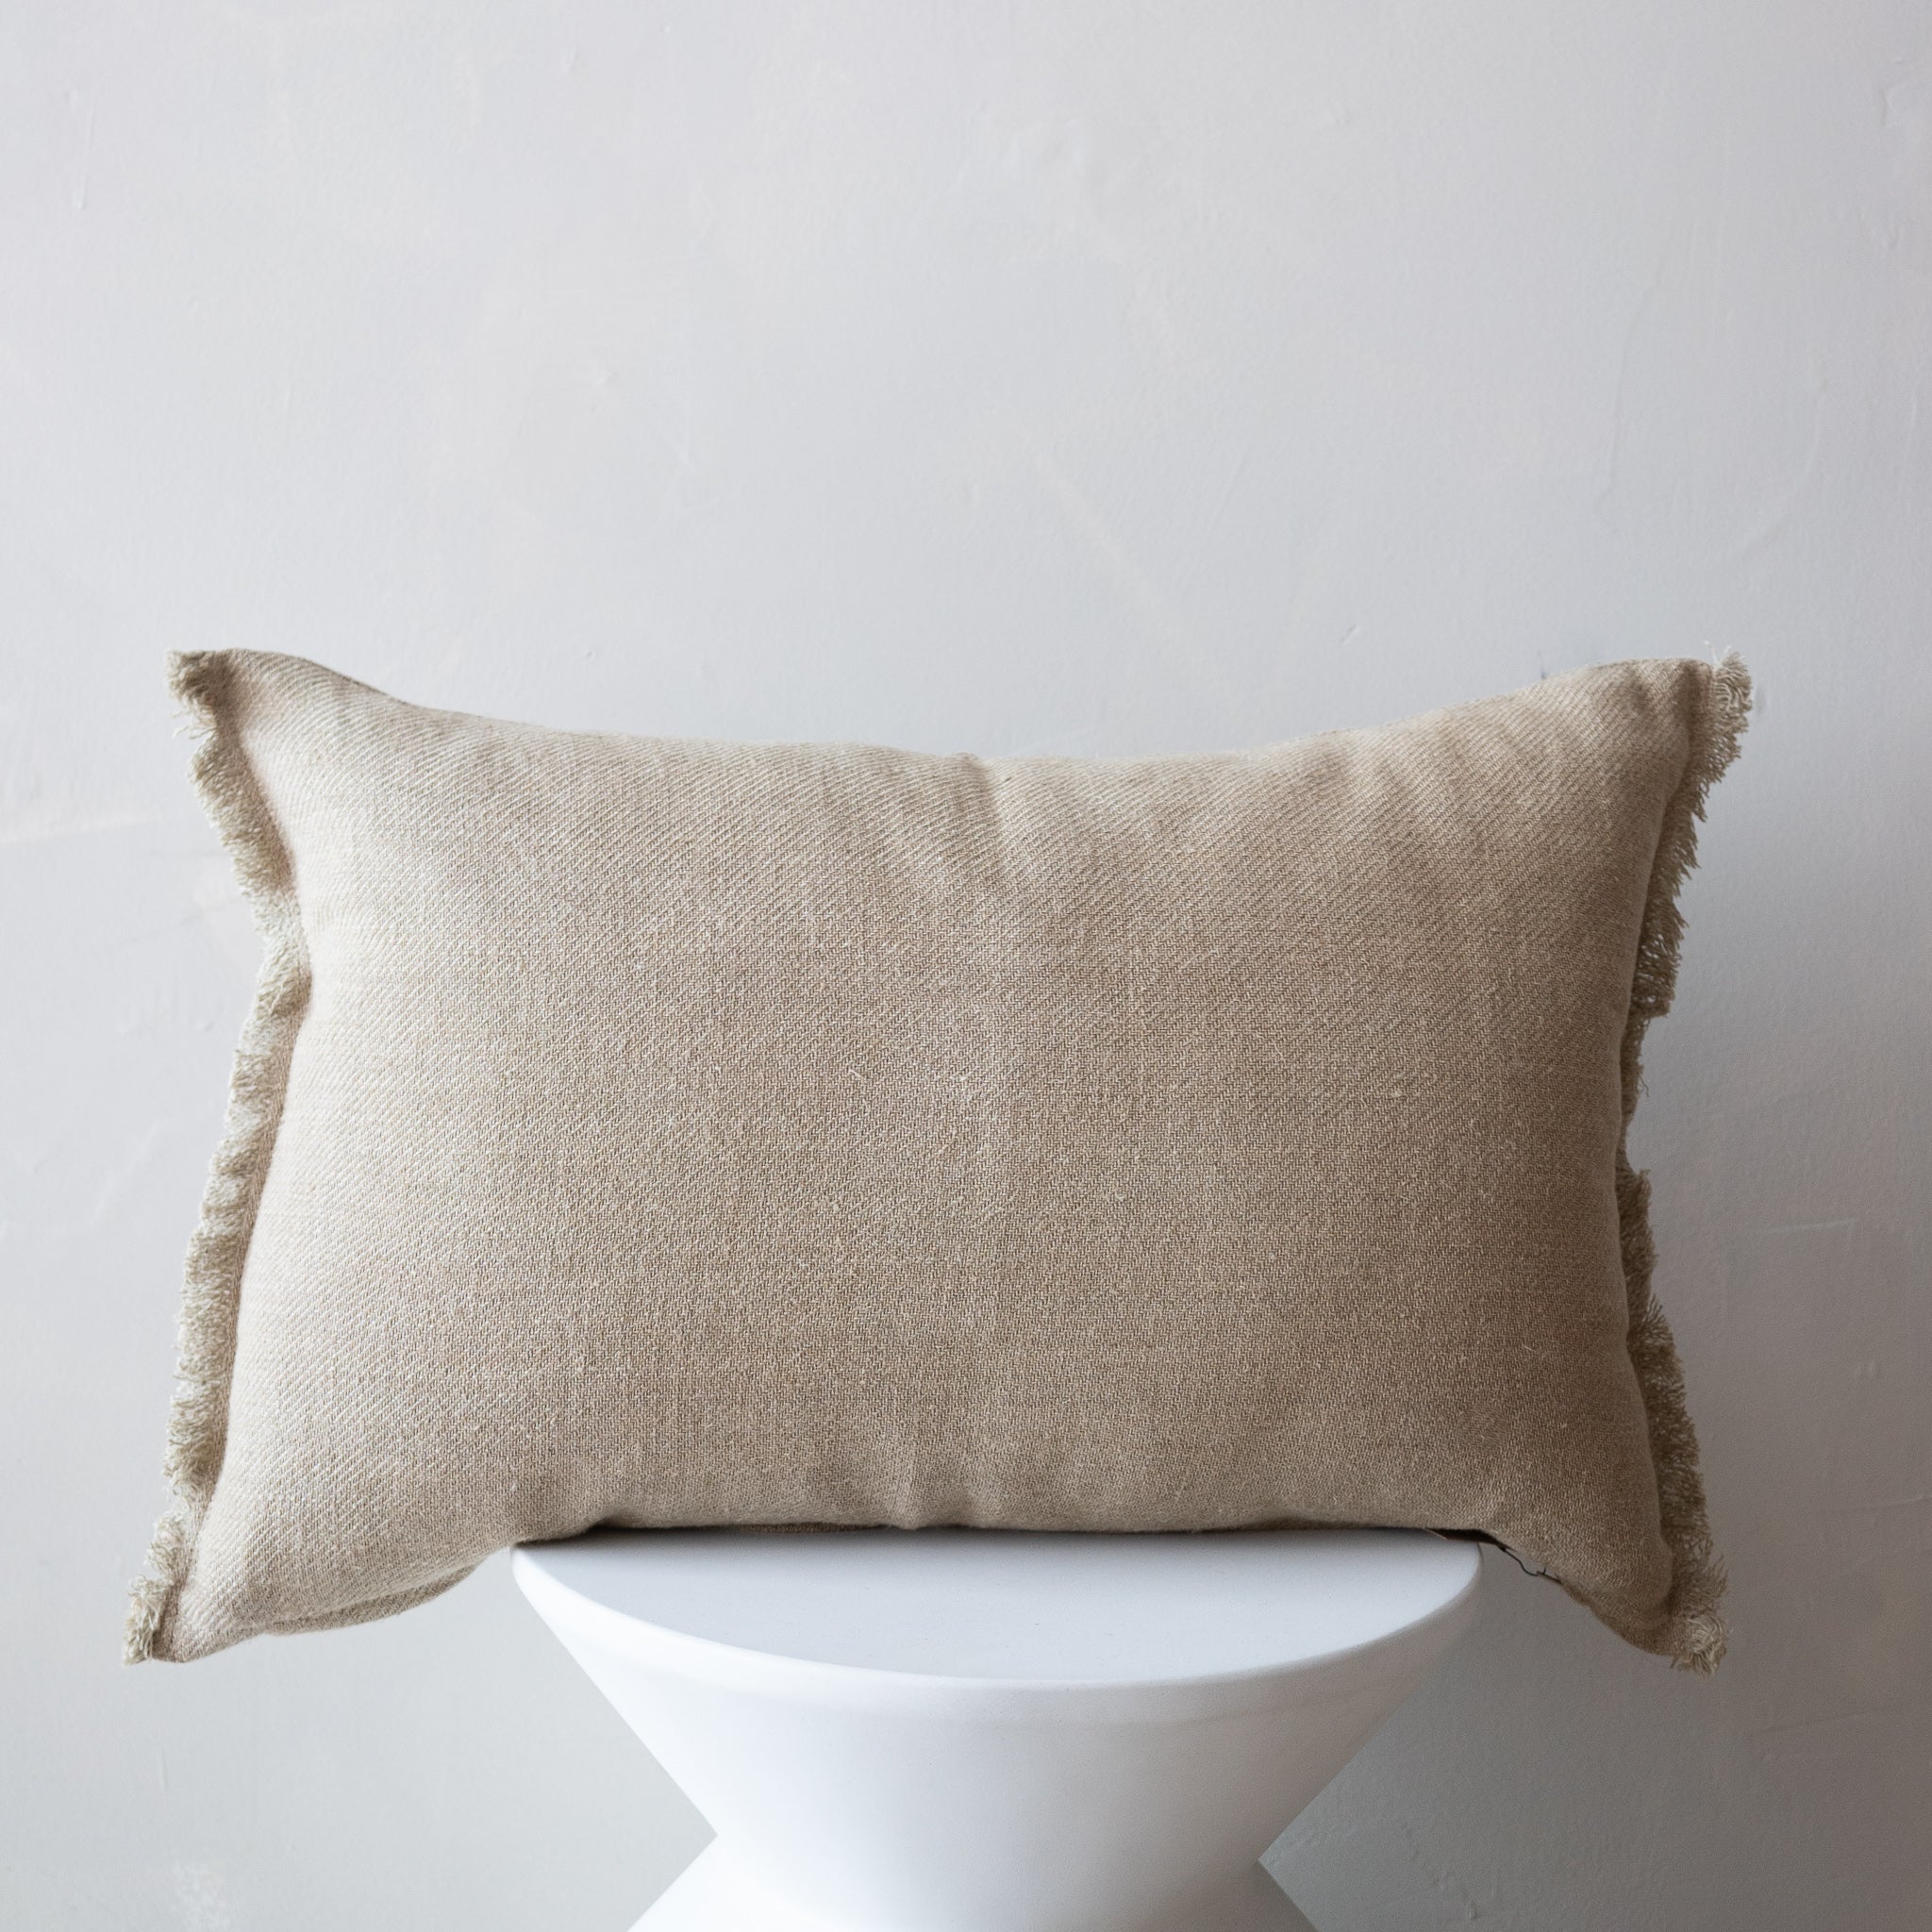 Flax Linen Decorative Pillow - Natural